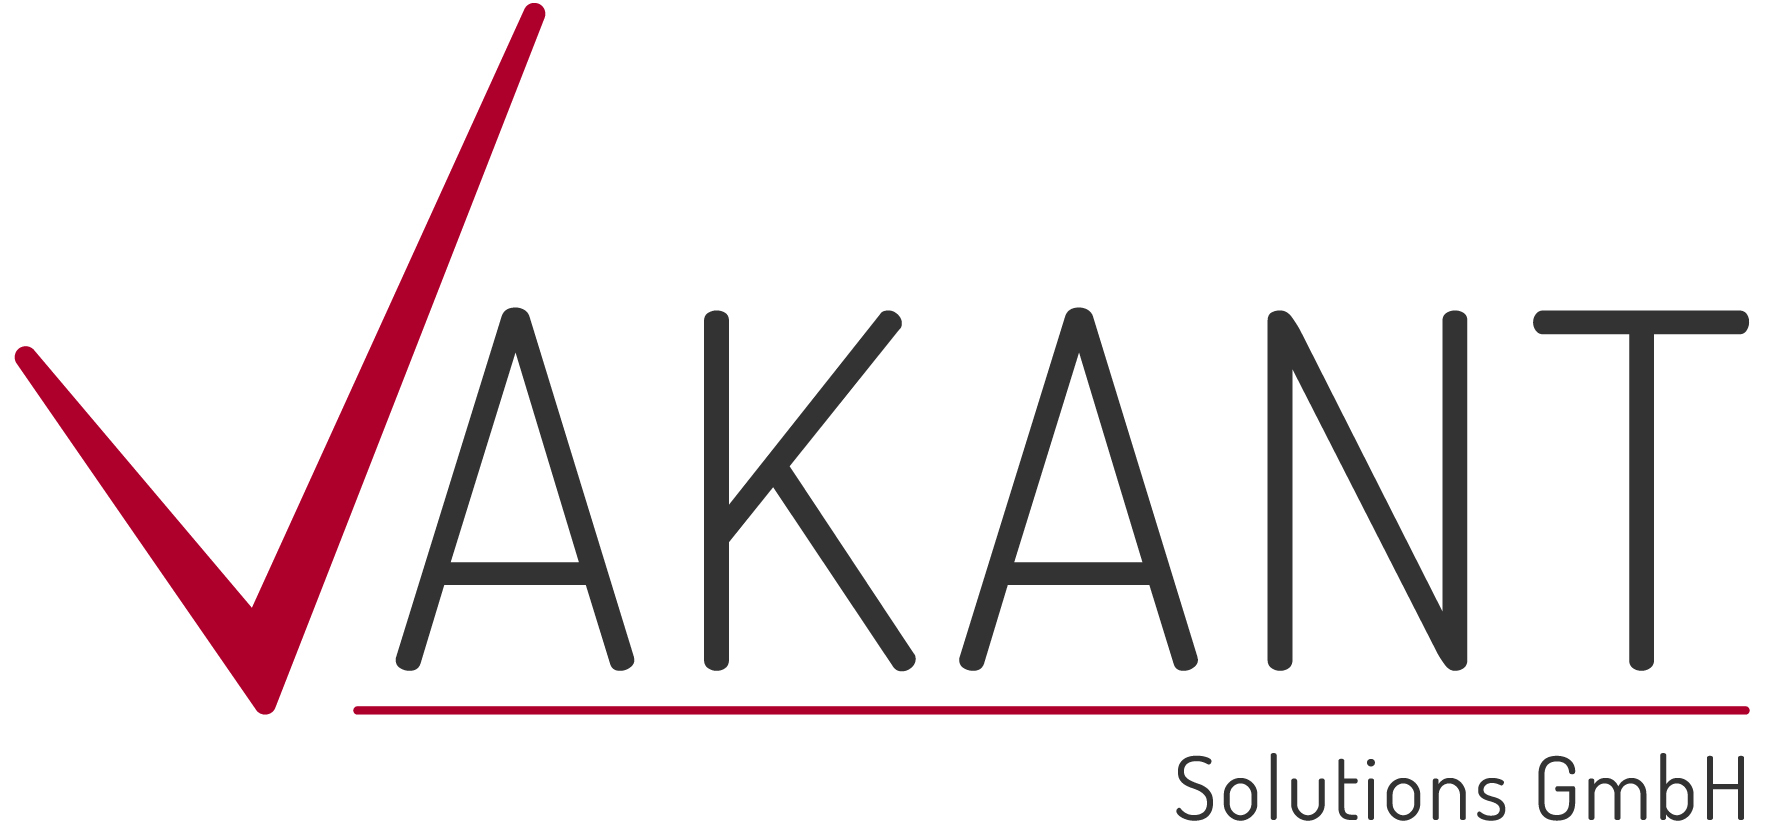 VAKANT Solutions GmbH